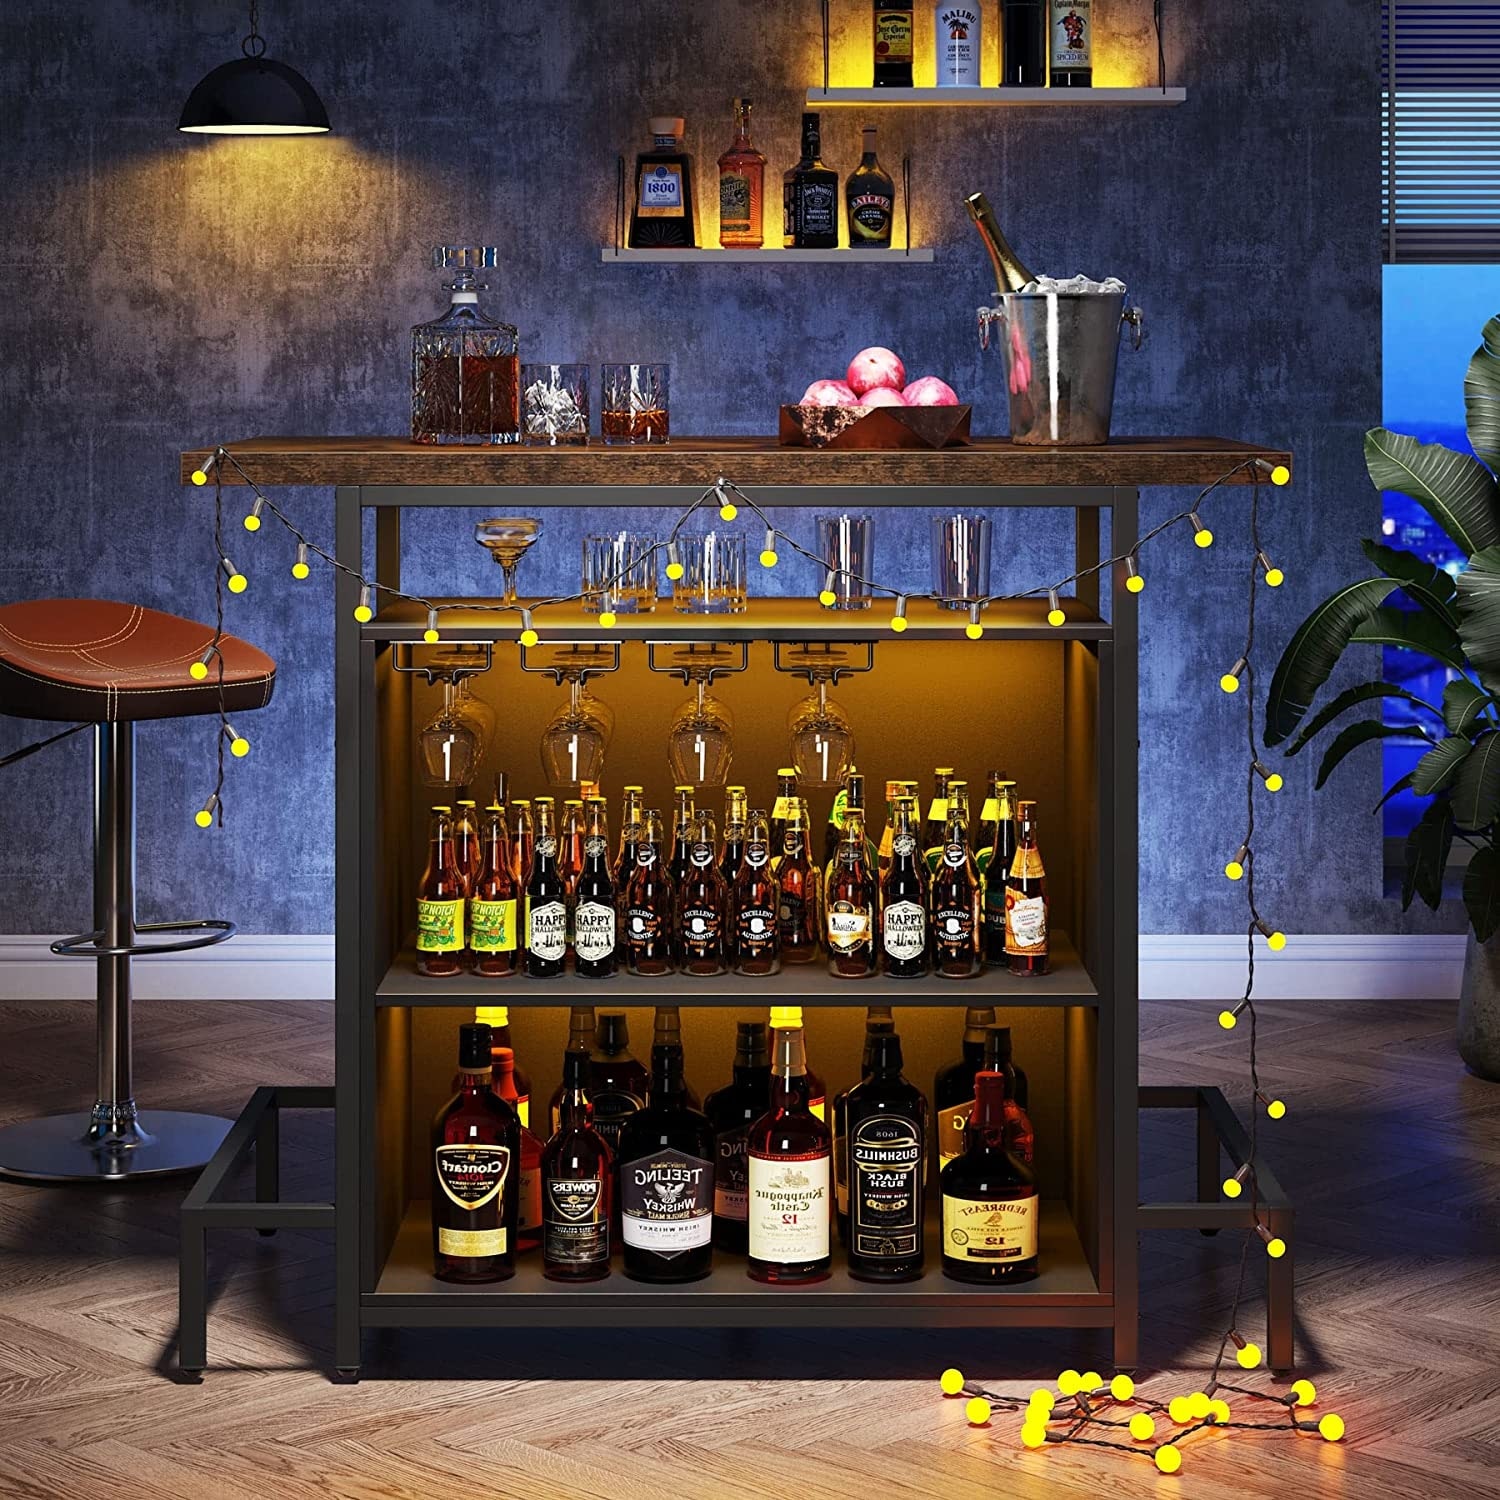 Home Bar Unit 3-Tier Liquor Bar Table with Glasses Holder Wine Storage - Black